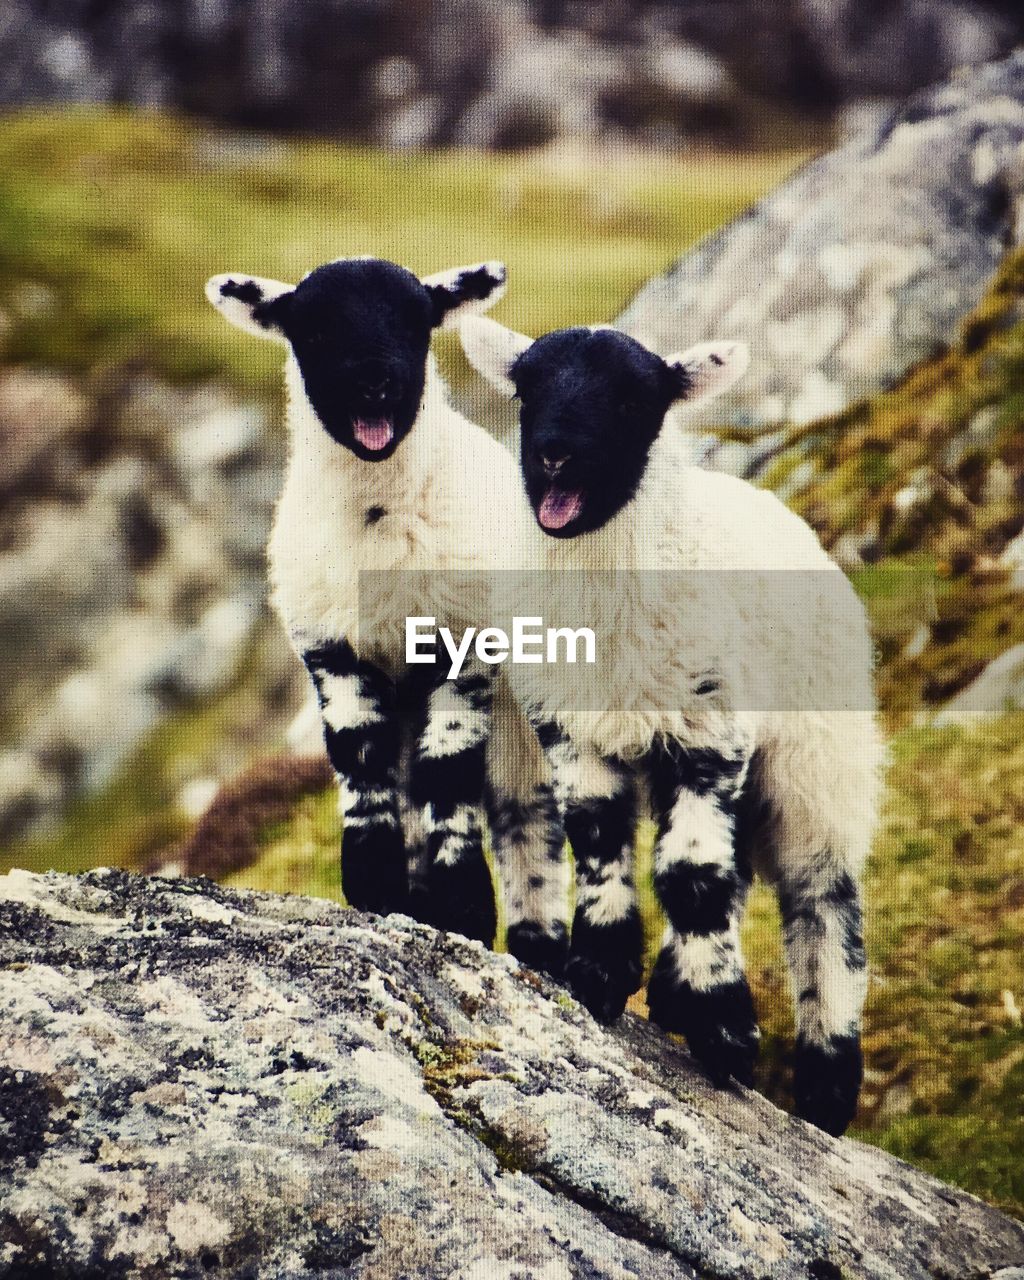 CLOSE-UP PORTRAIT OF SHEEP ON ROCKS